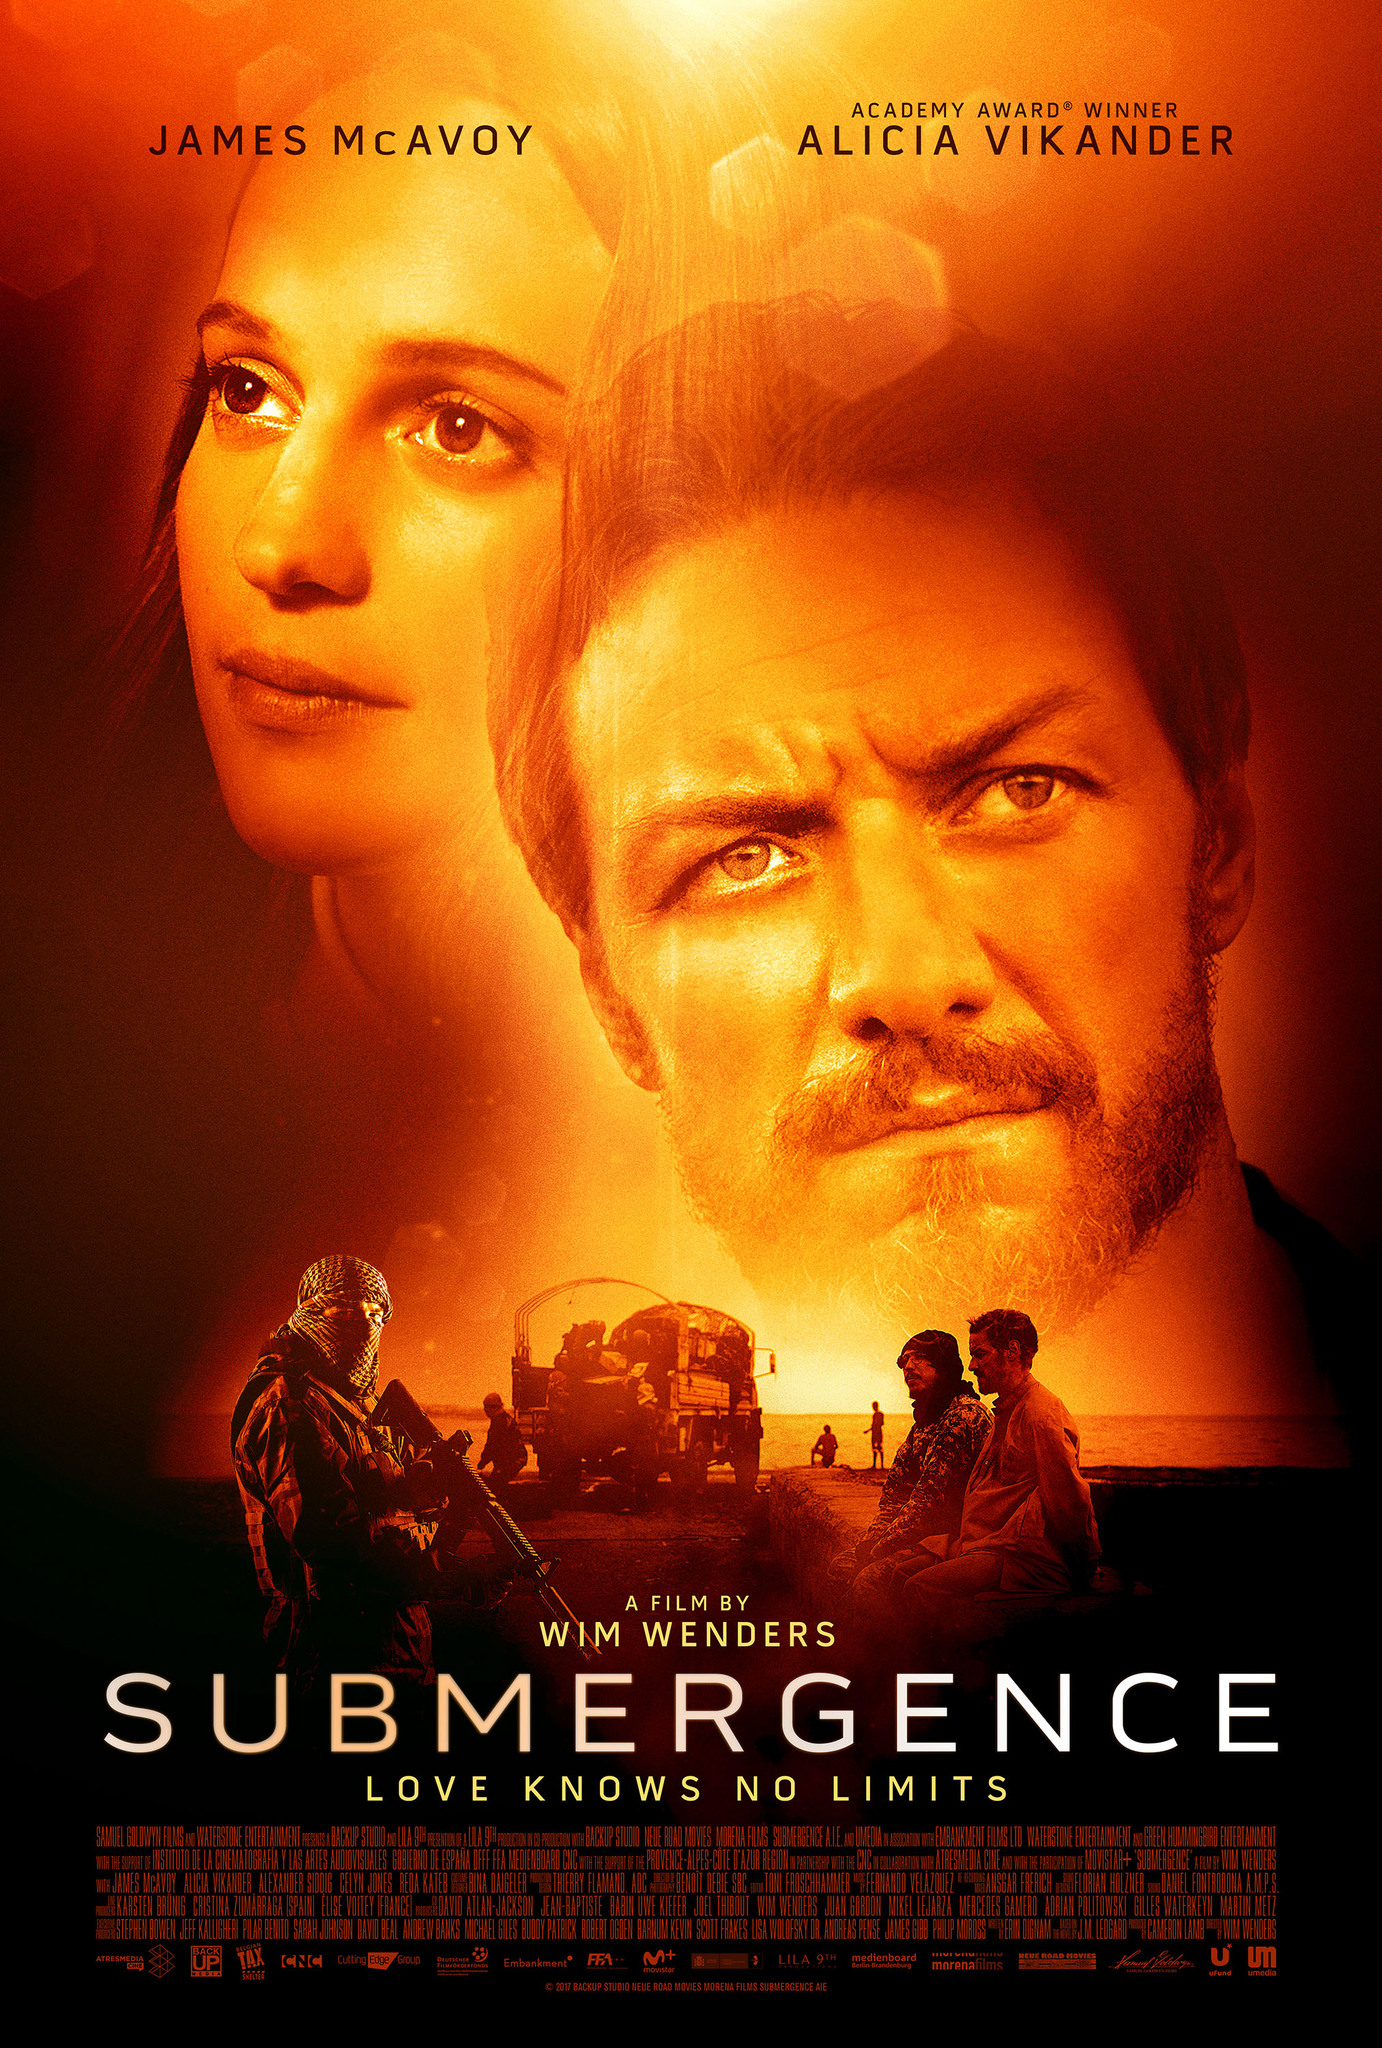 Nonton film Submergence layarkaca21 indoxx1 ganool online streaming terbaru